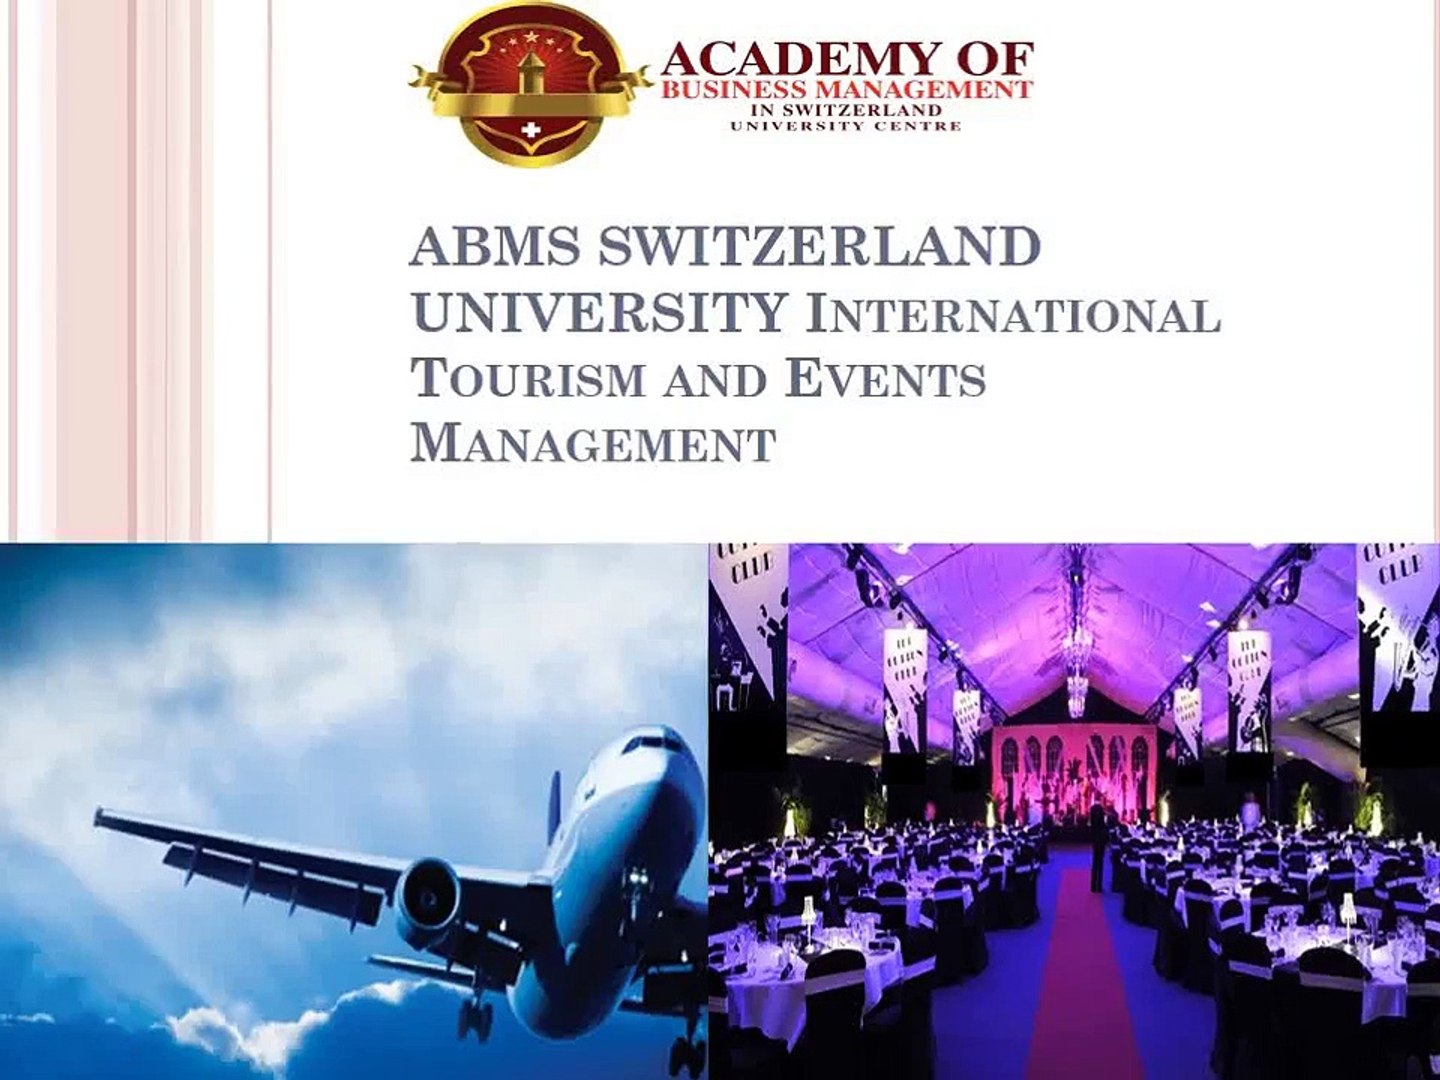 ABMS SWITZERLAND UNIVERSITY International Tourism and Events Management